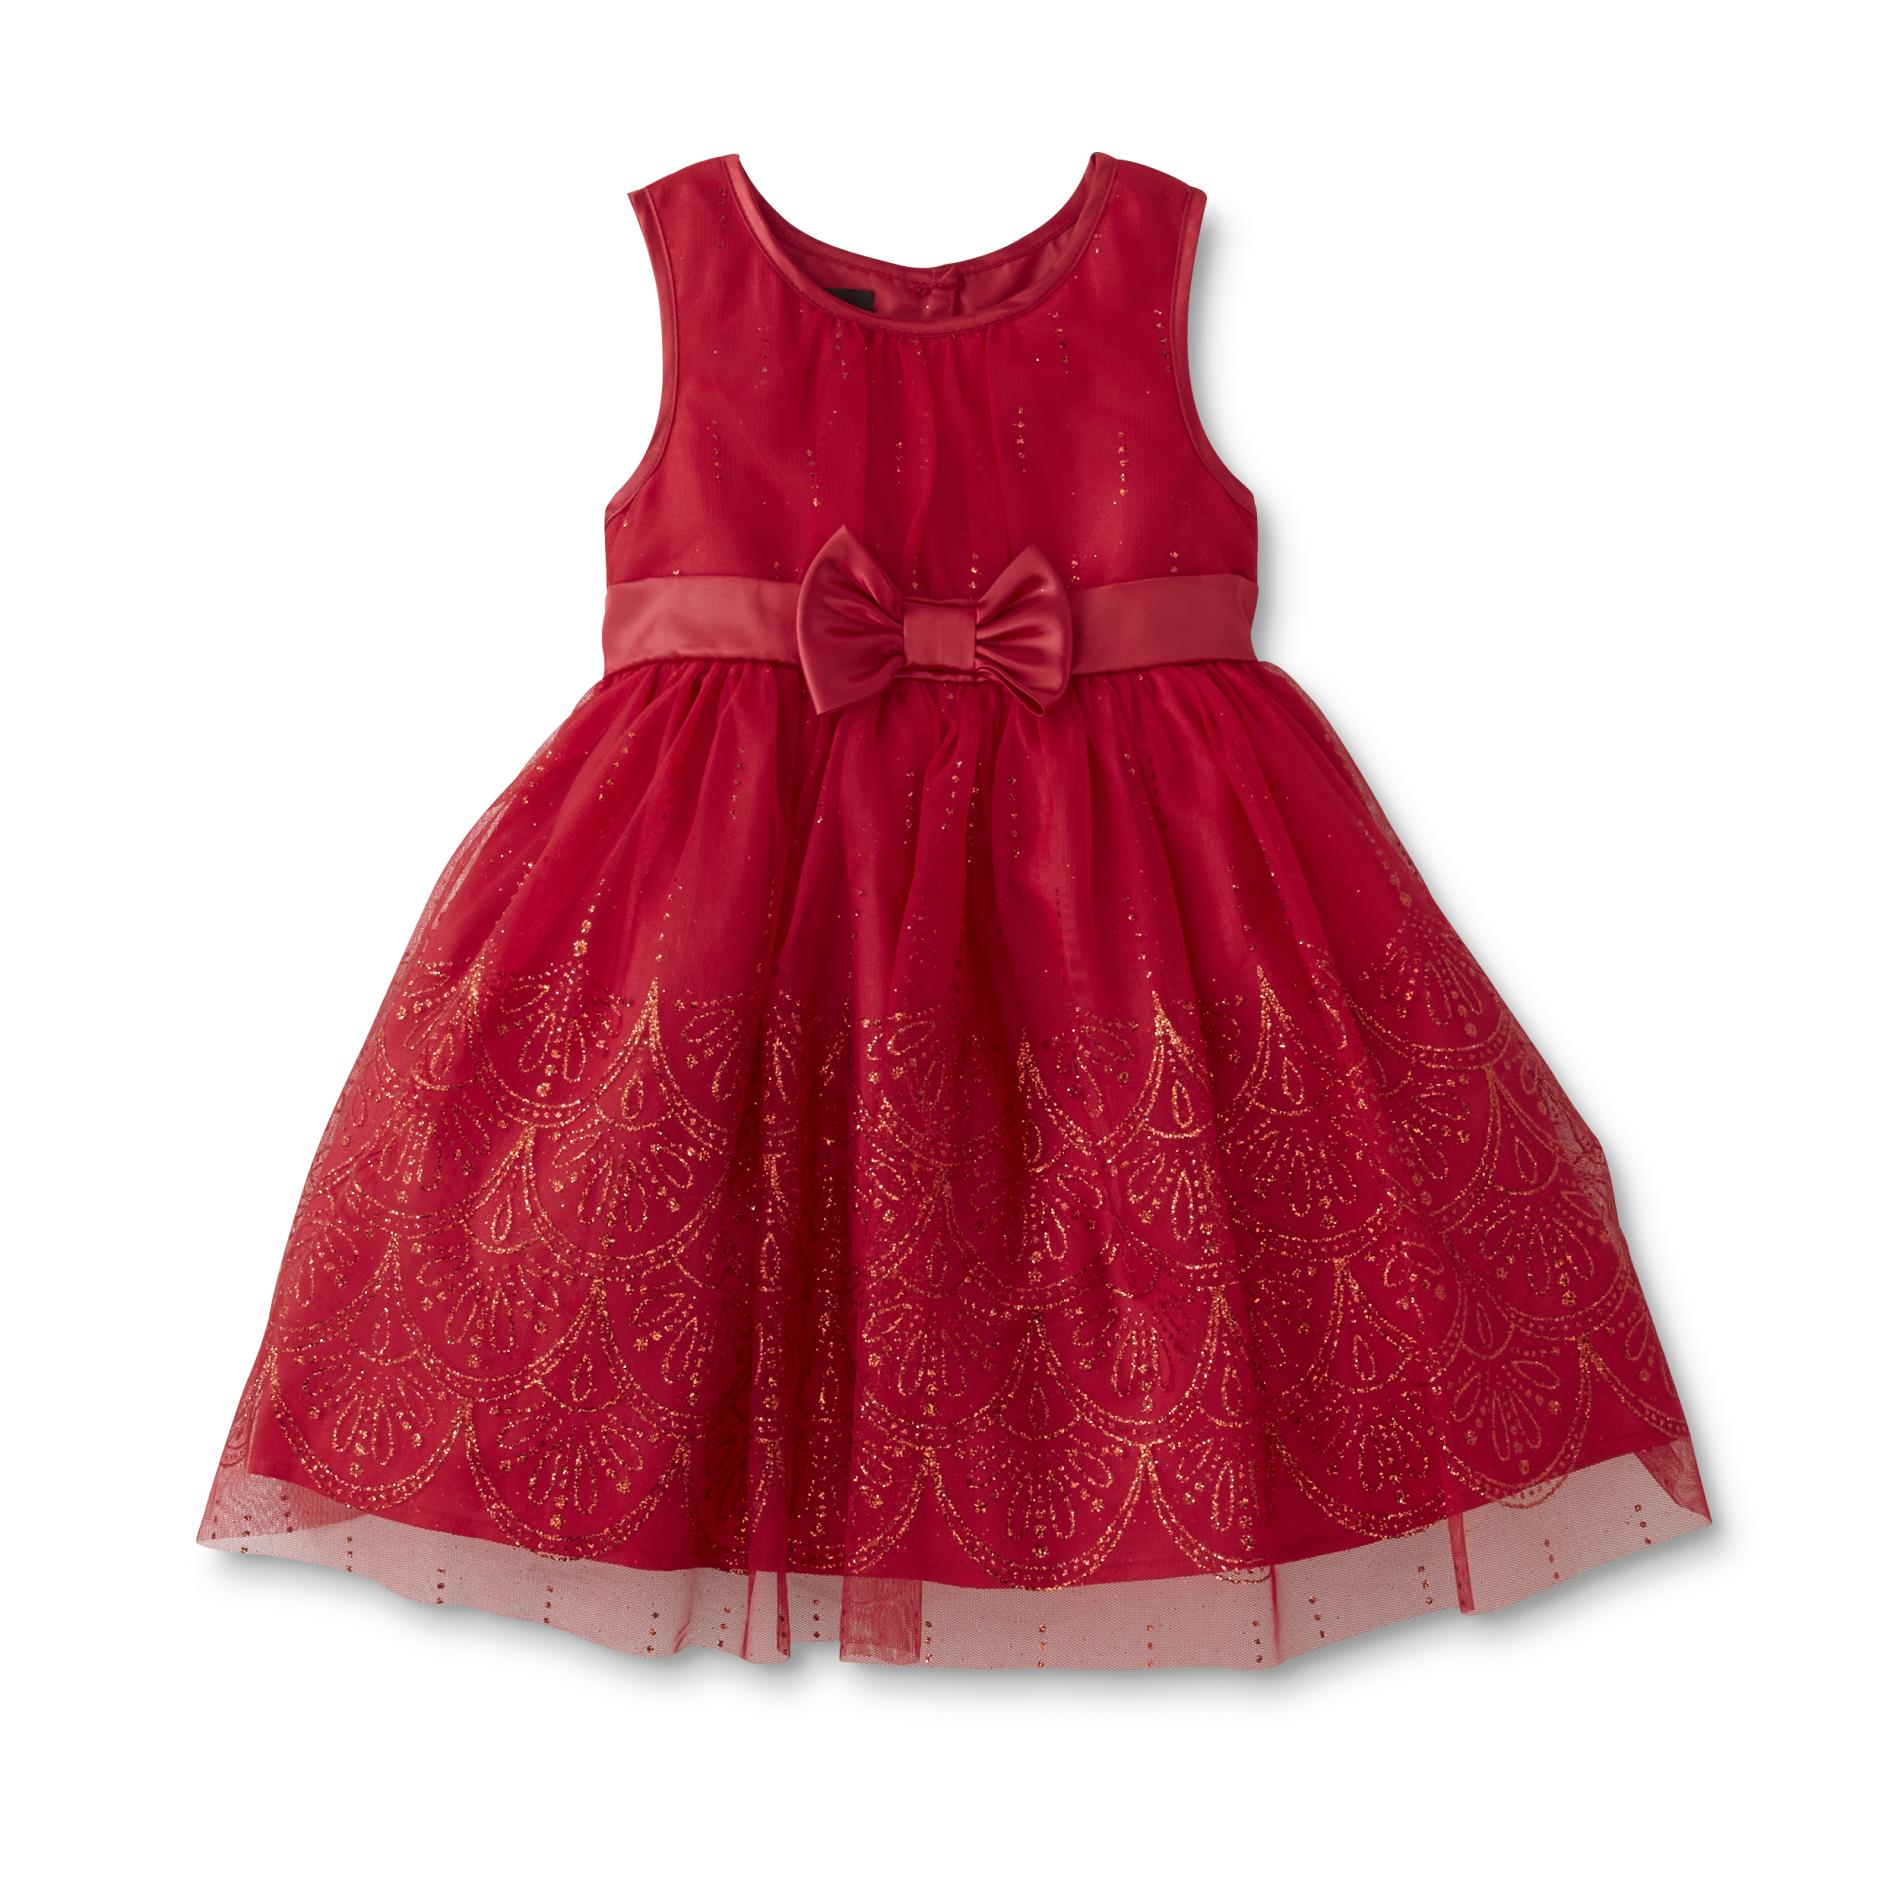 Lilt Infant & Toddler Girl's Occasion Dress